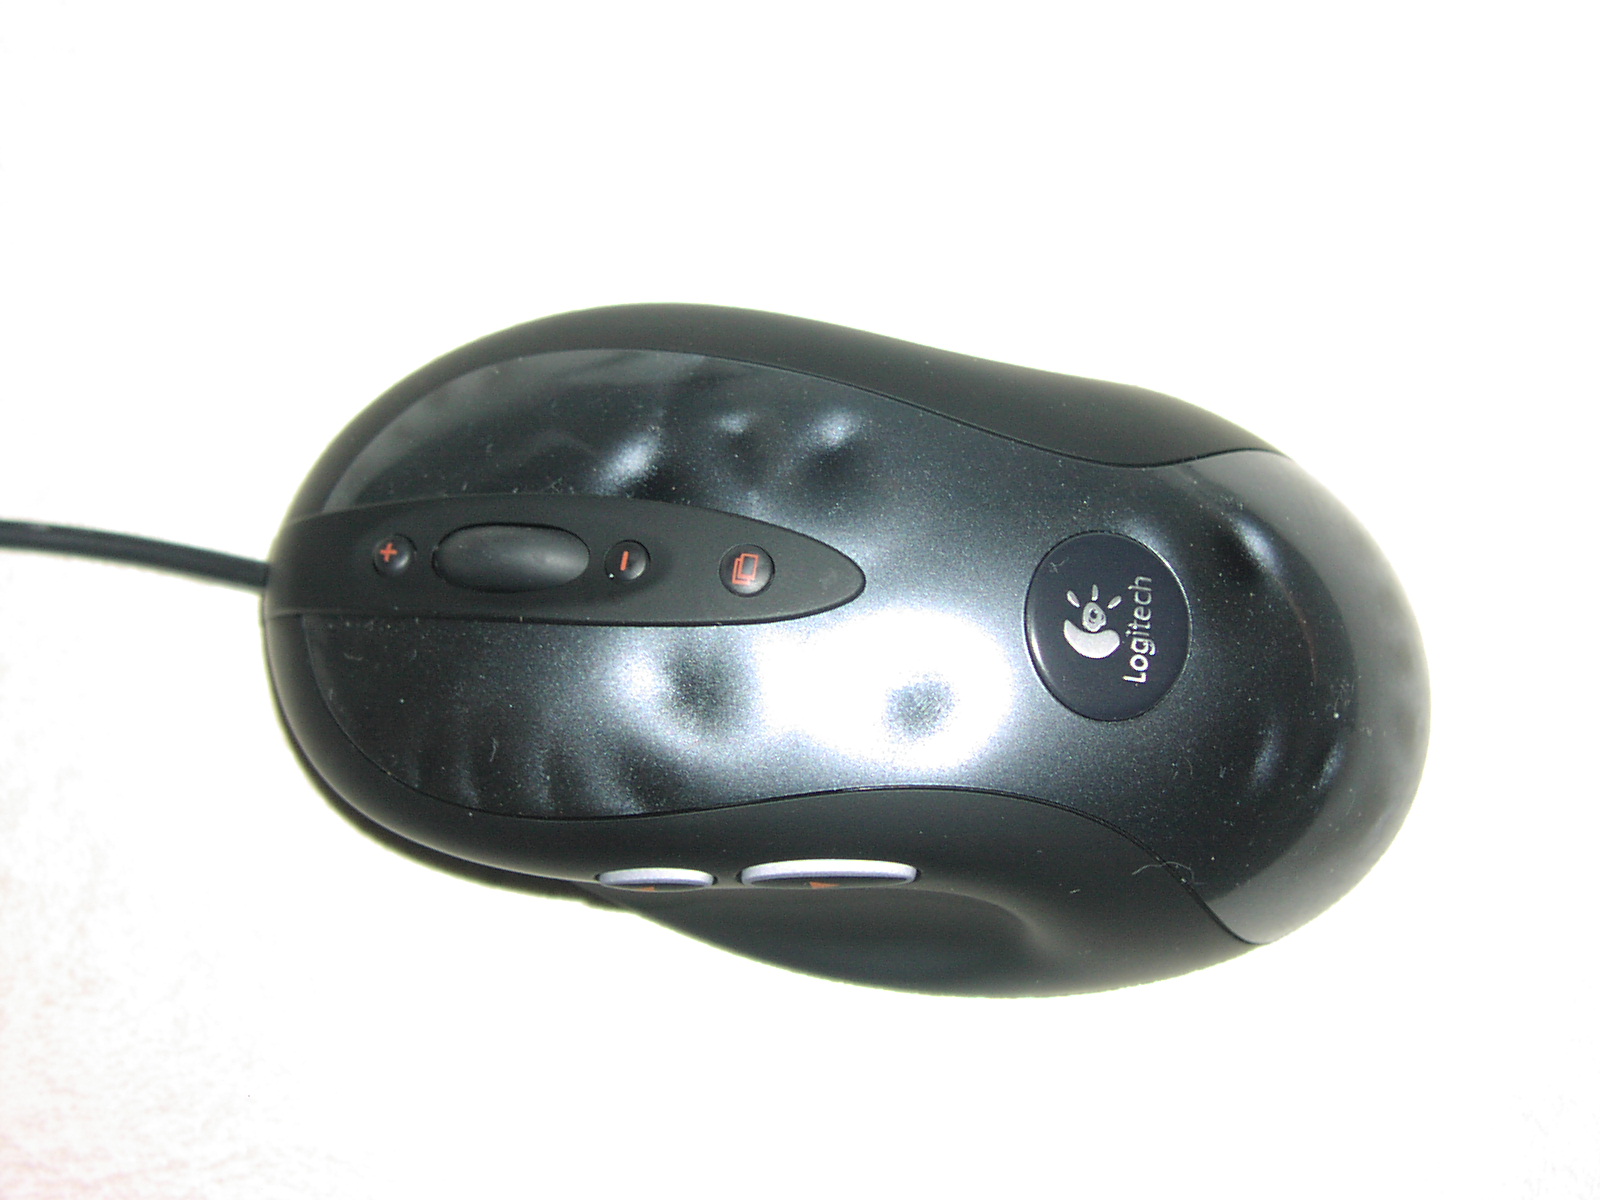 Mouse.JPG